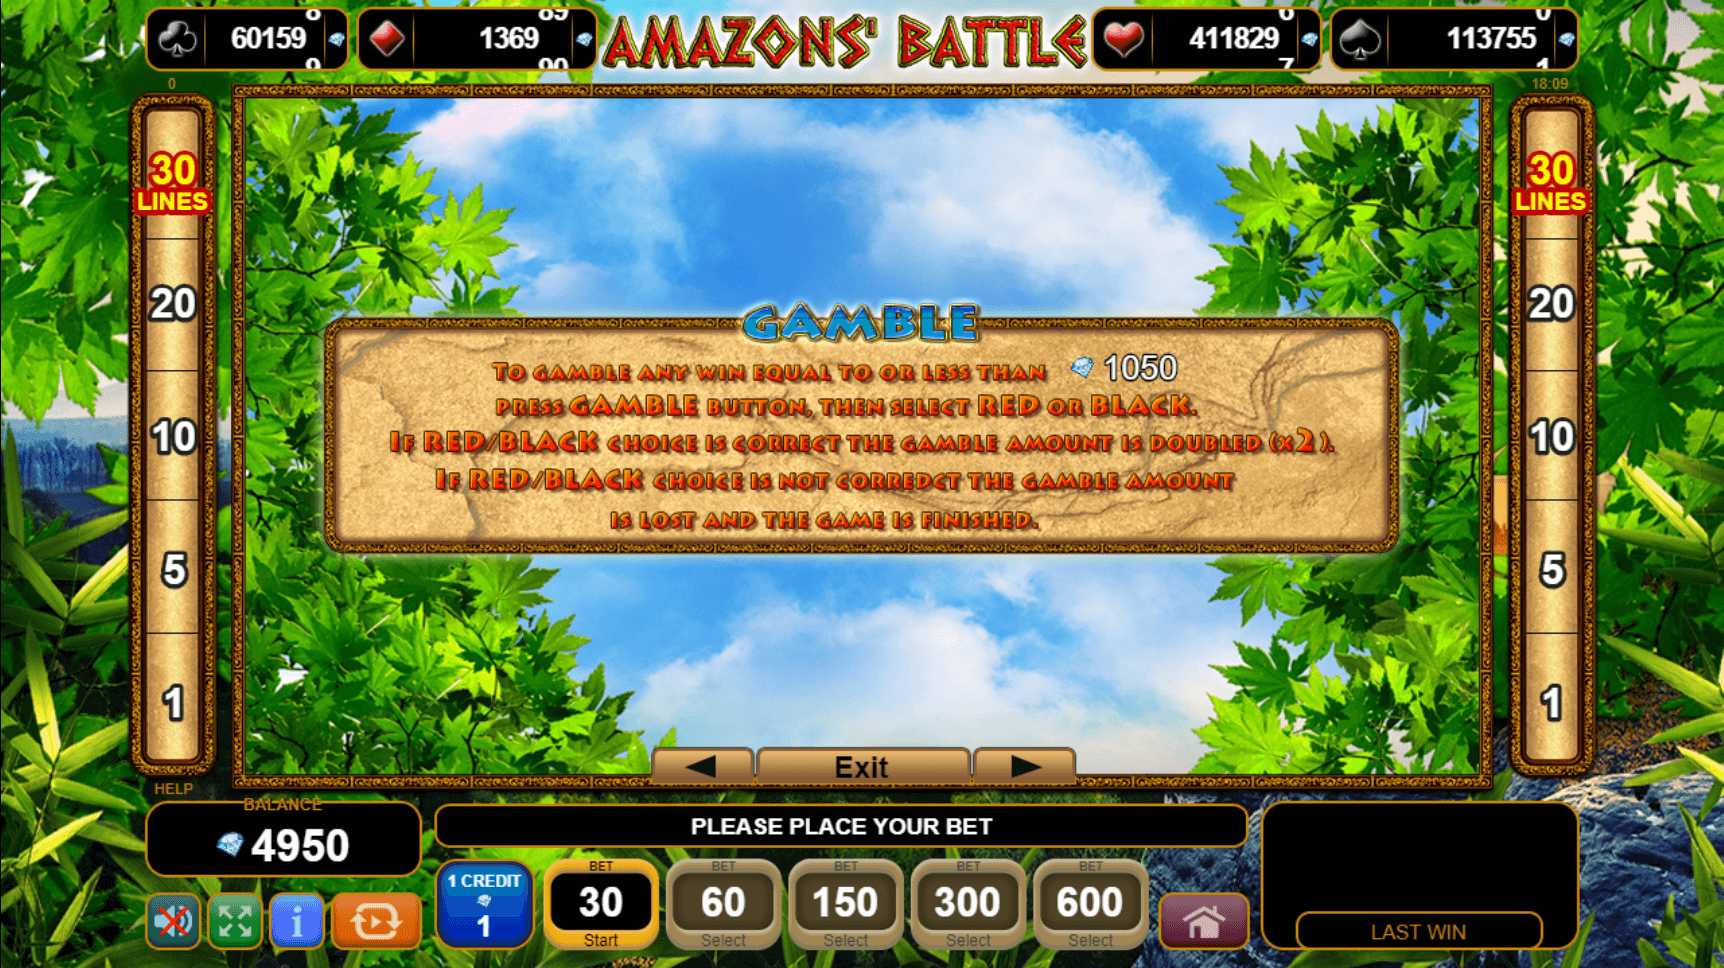 50 amazons battle slot machine detail image 3